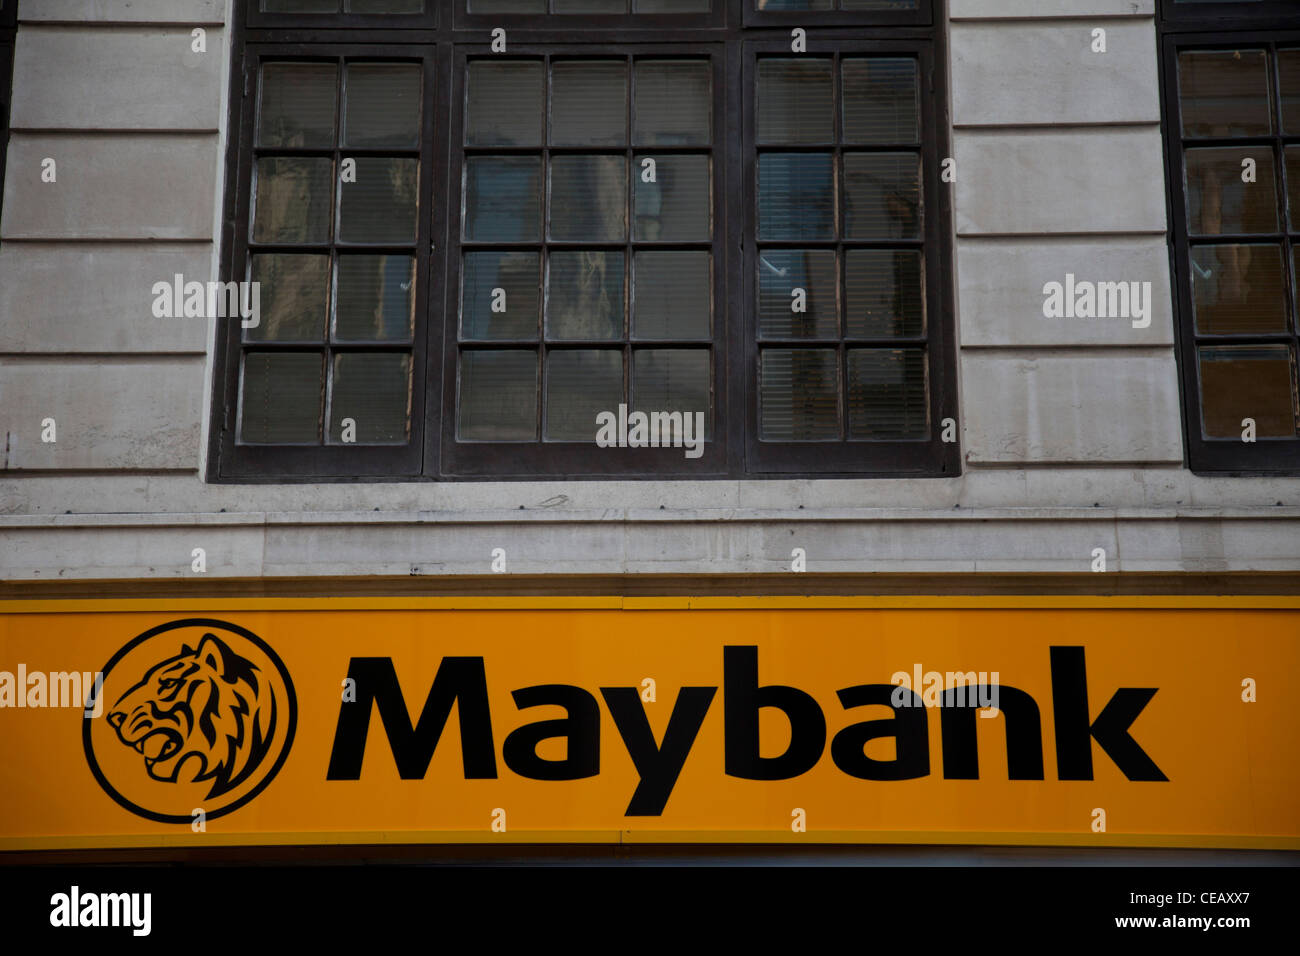 Maybank stock